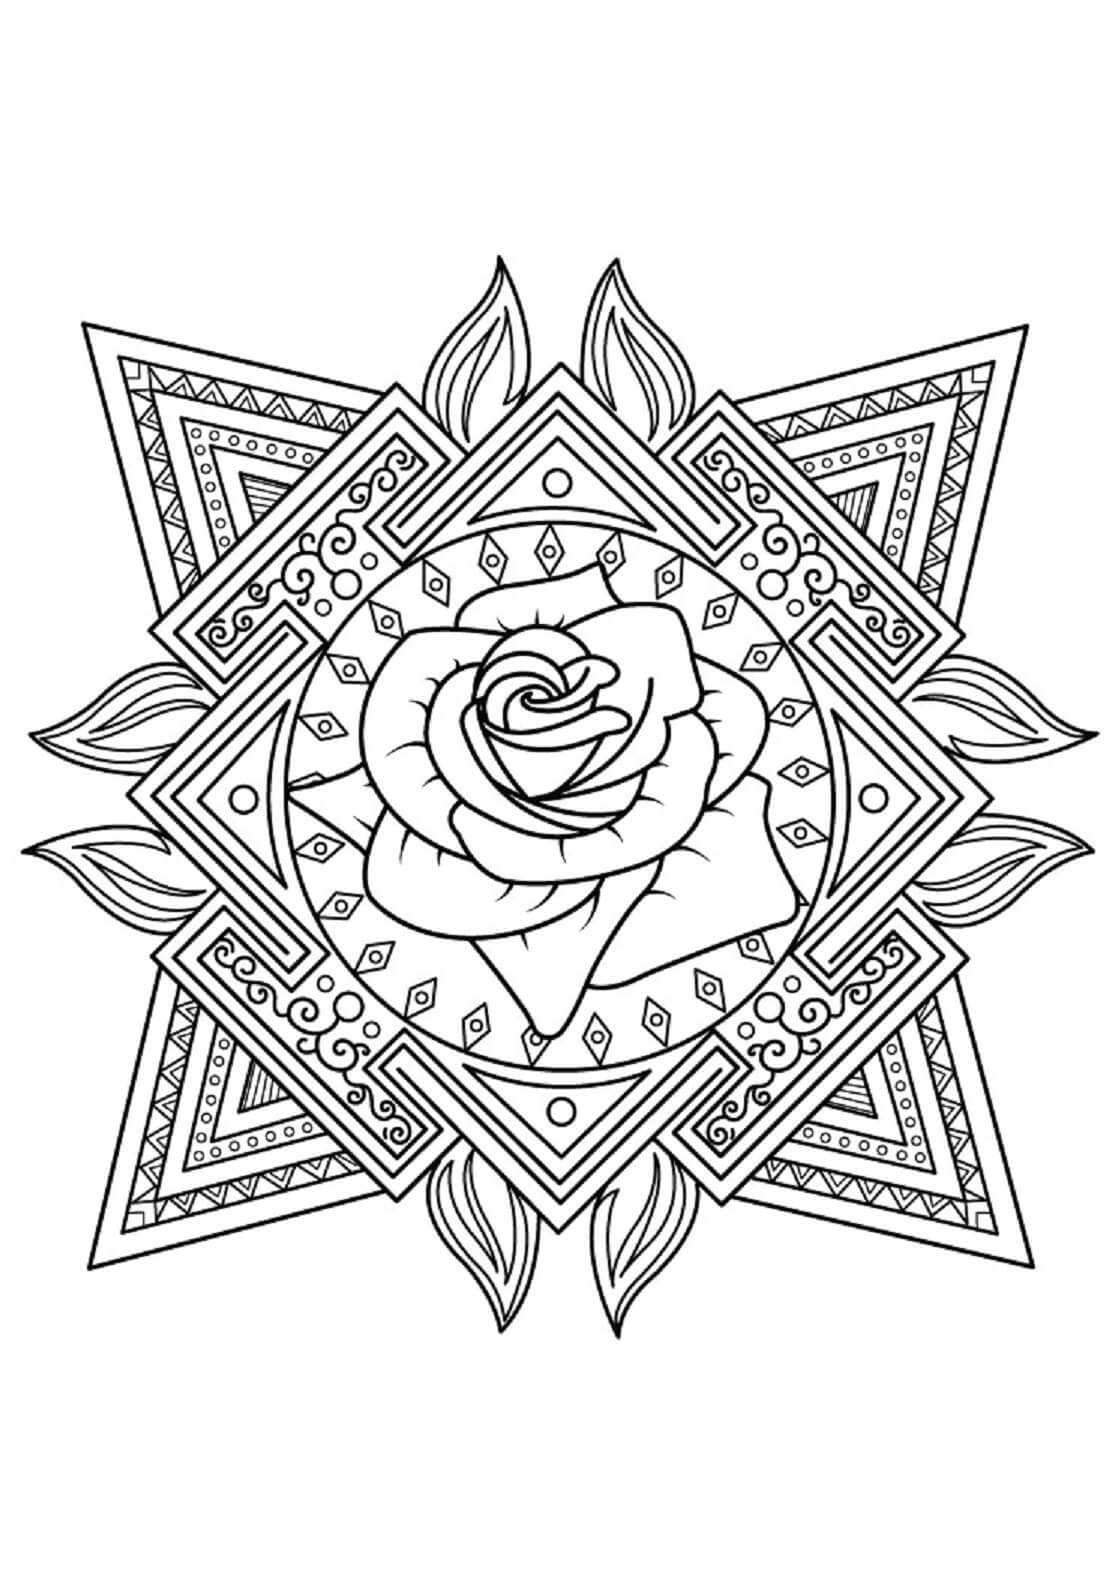 Mandala Rose Coloring Page - Sheet 1 Mandalas